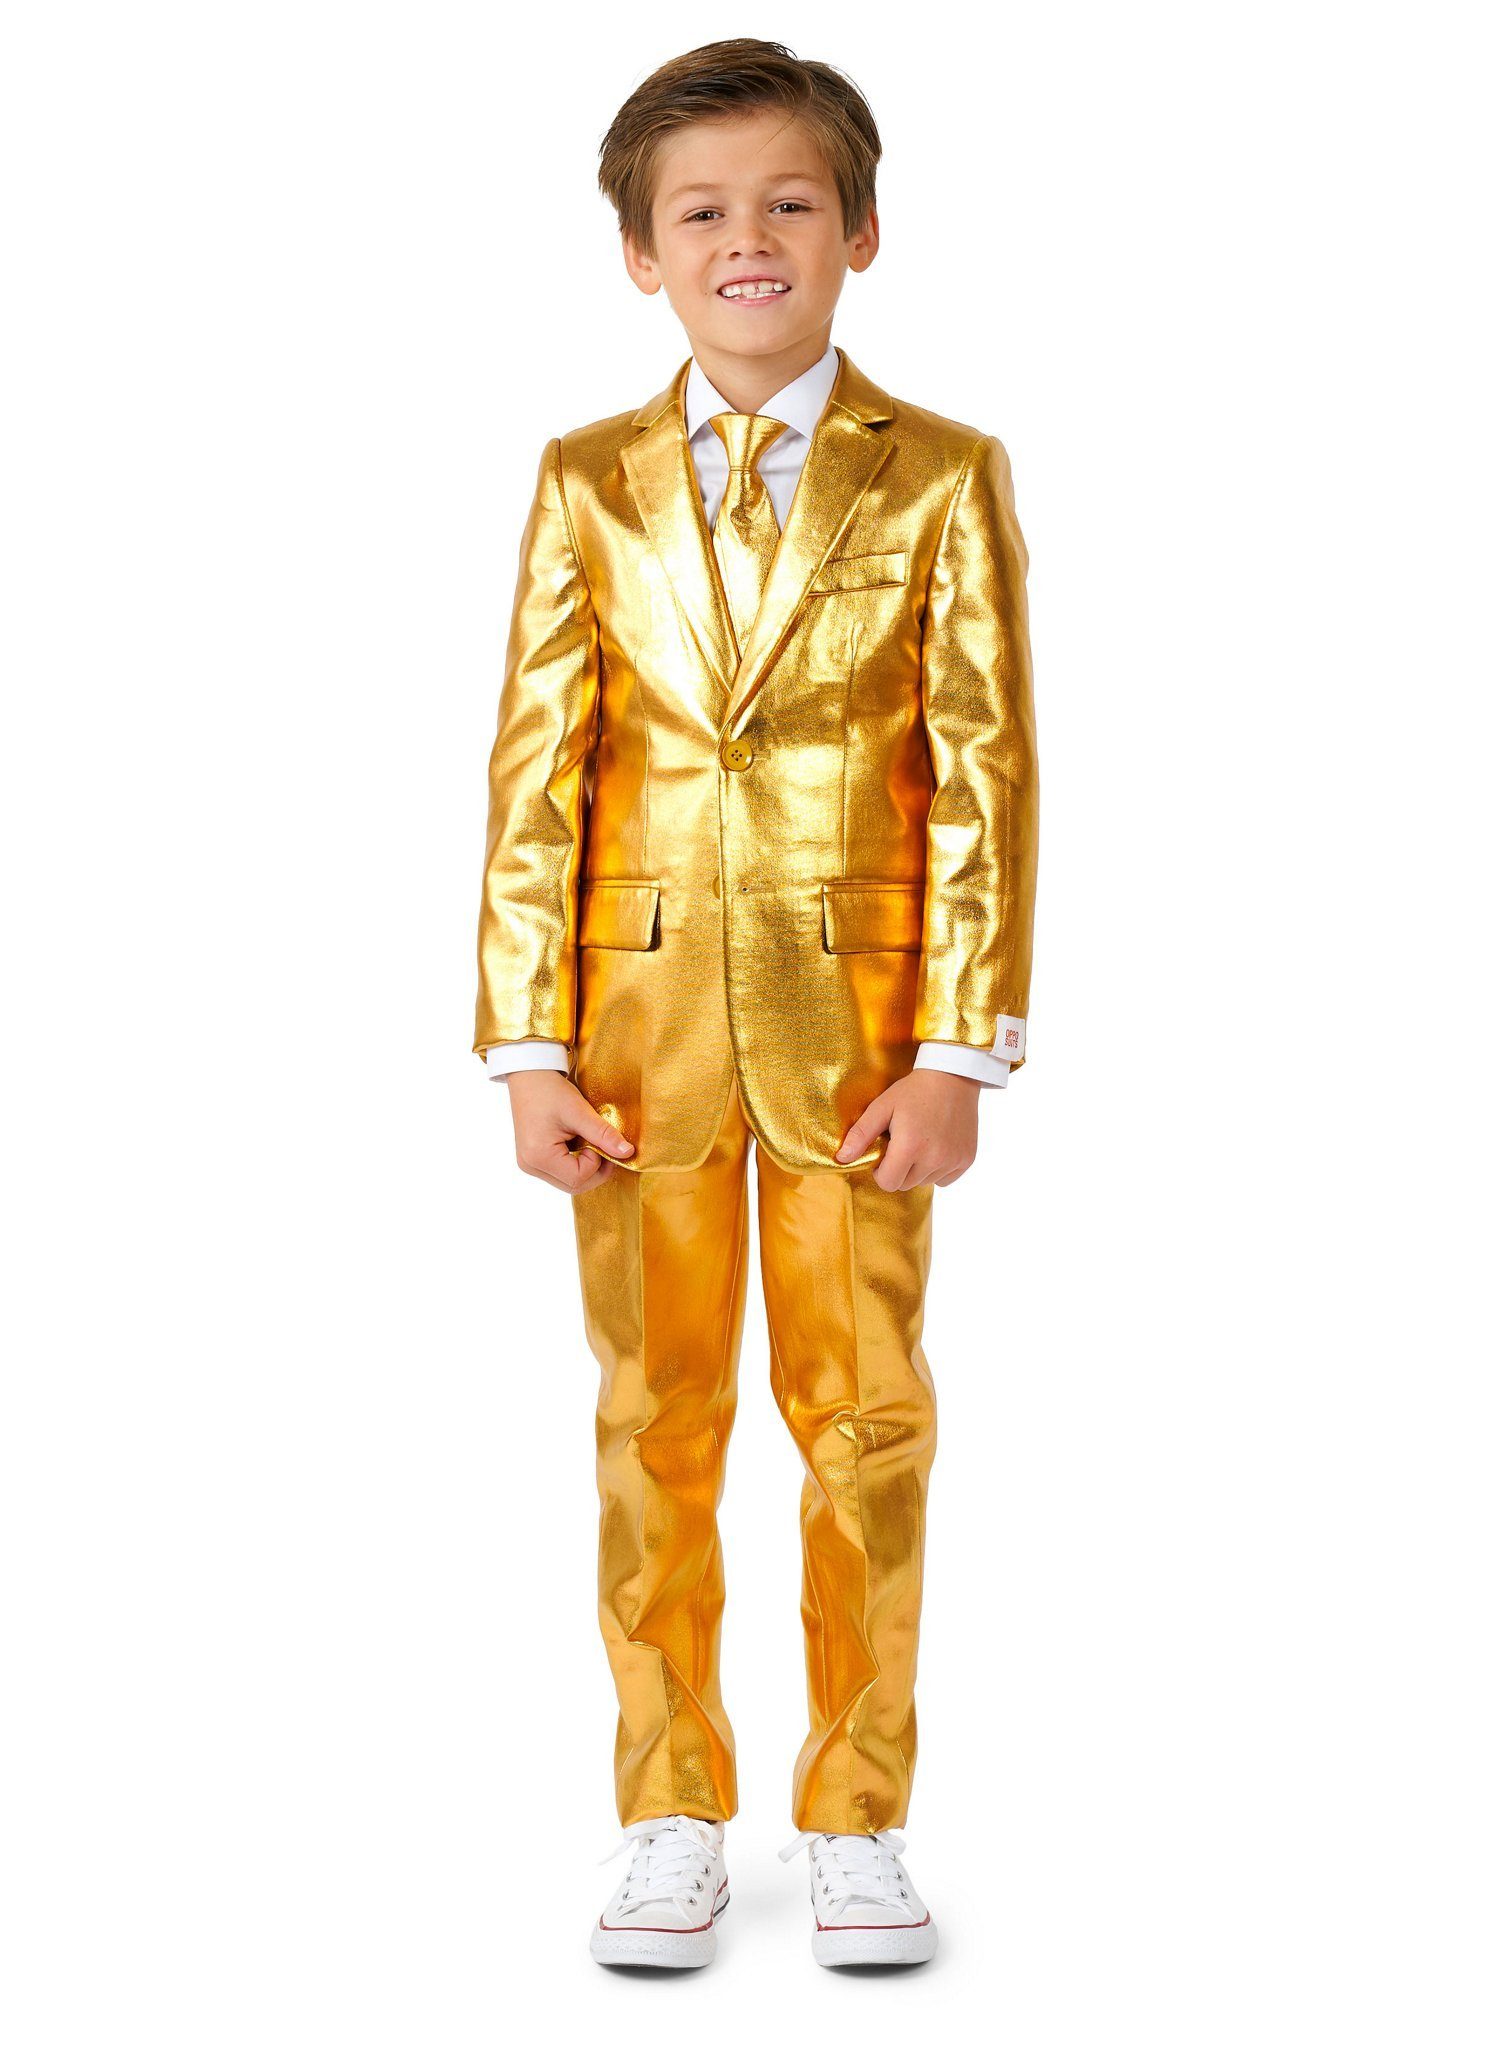 Opposuits Kinderanzug Boys Groovy Gold Anzug für Kinder 50